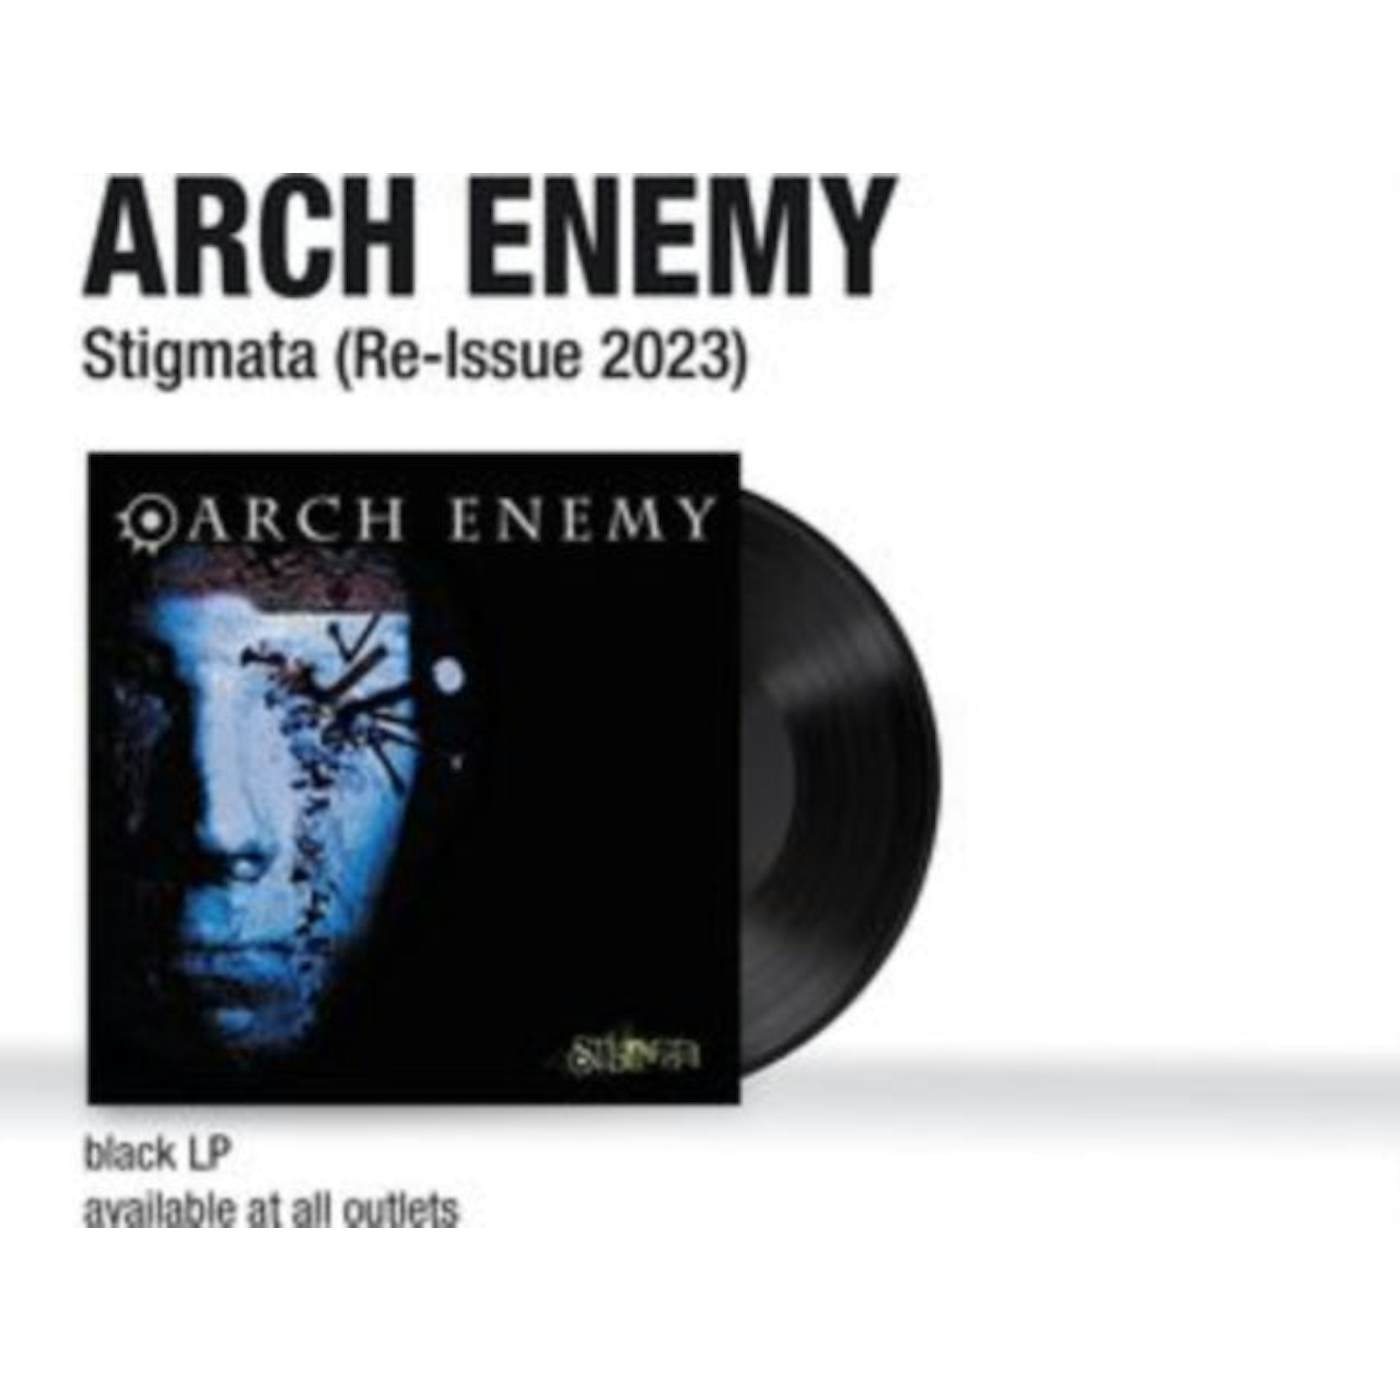 Arch Enemy LP Vinyl Record - Stigmata (Re-Issue 20. 23)